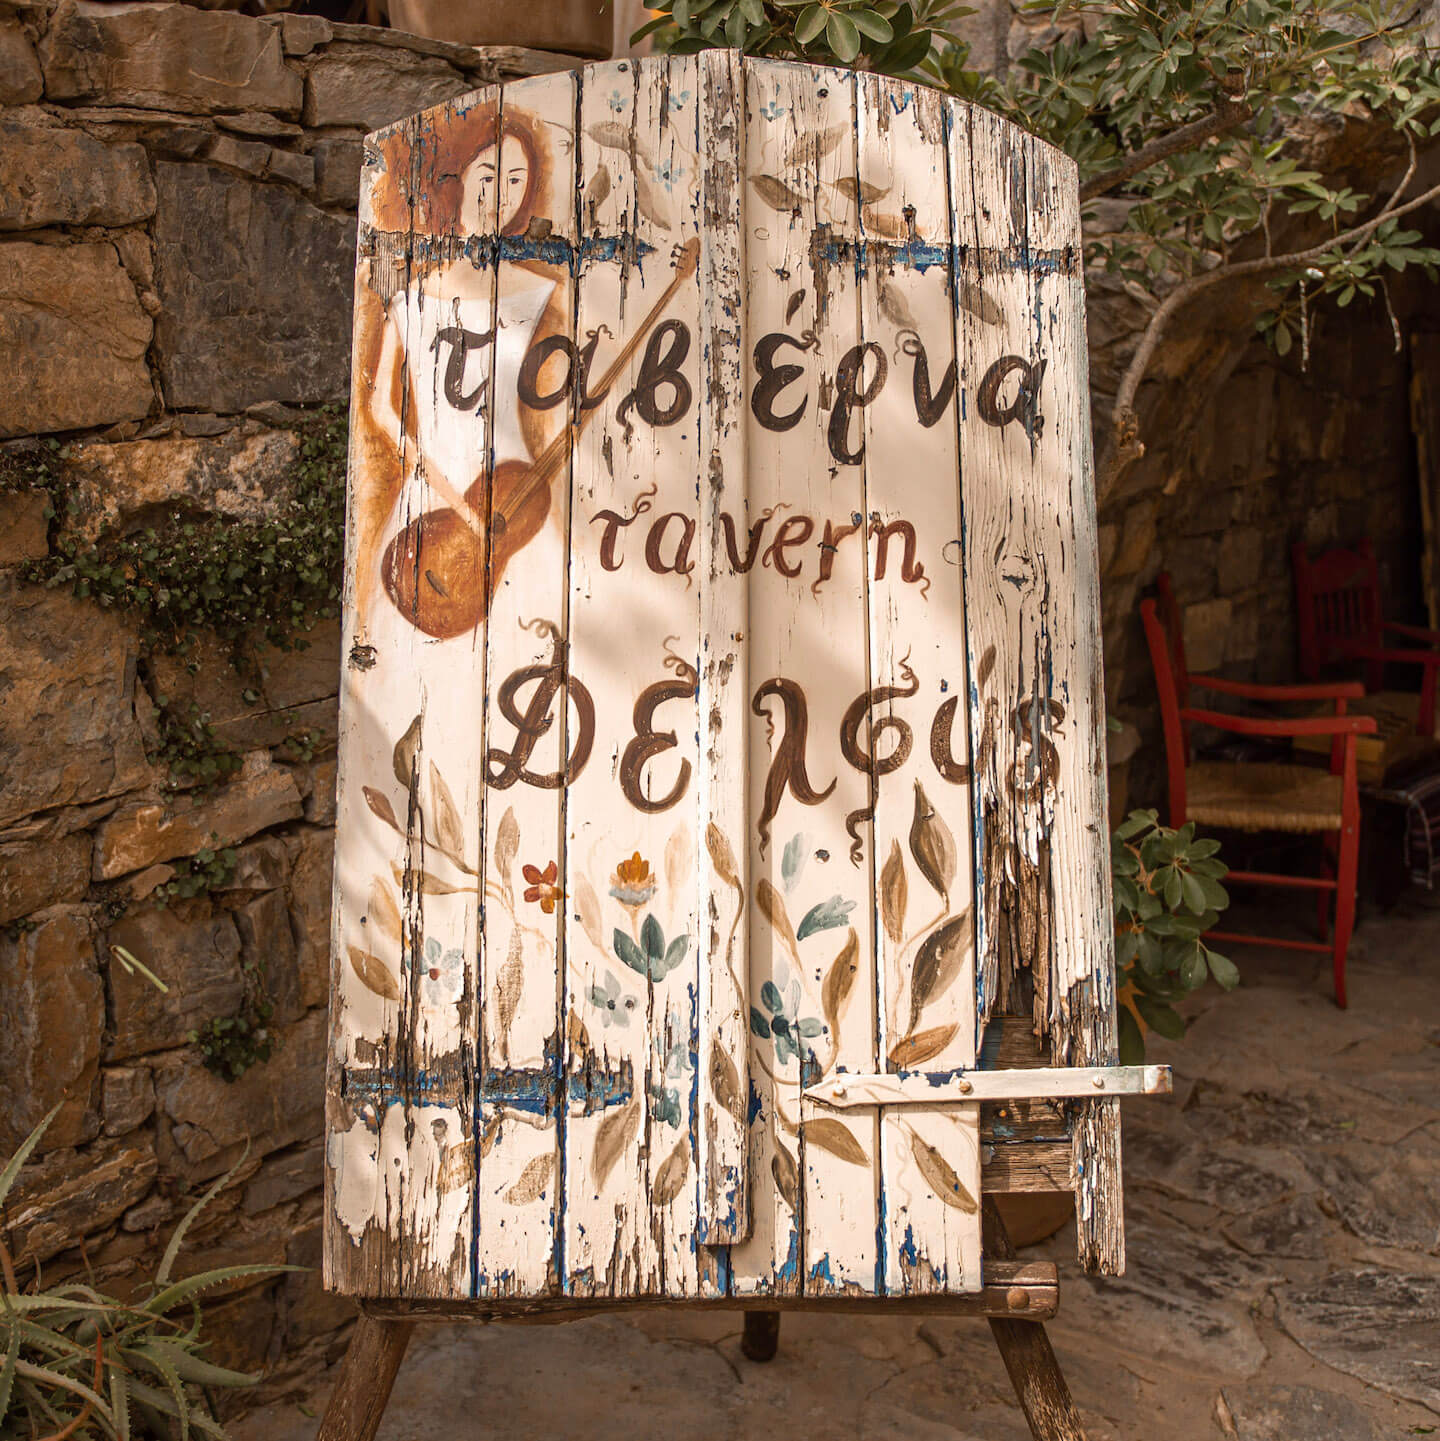 Arolithos Tavern